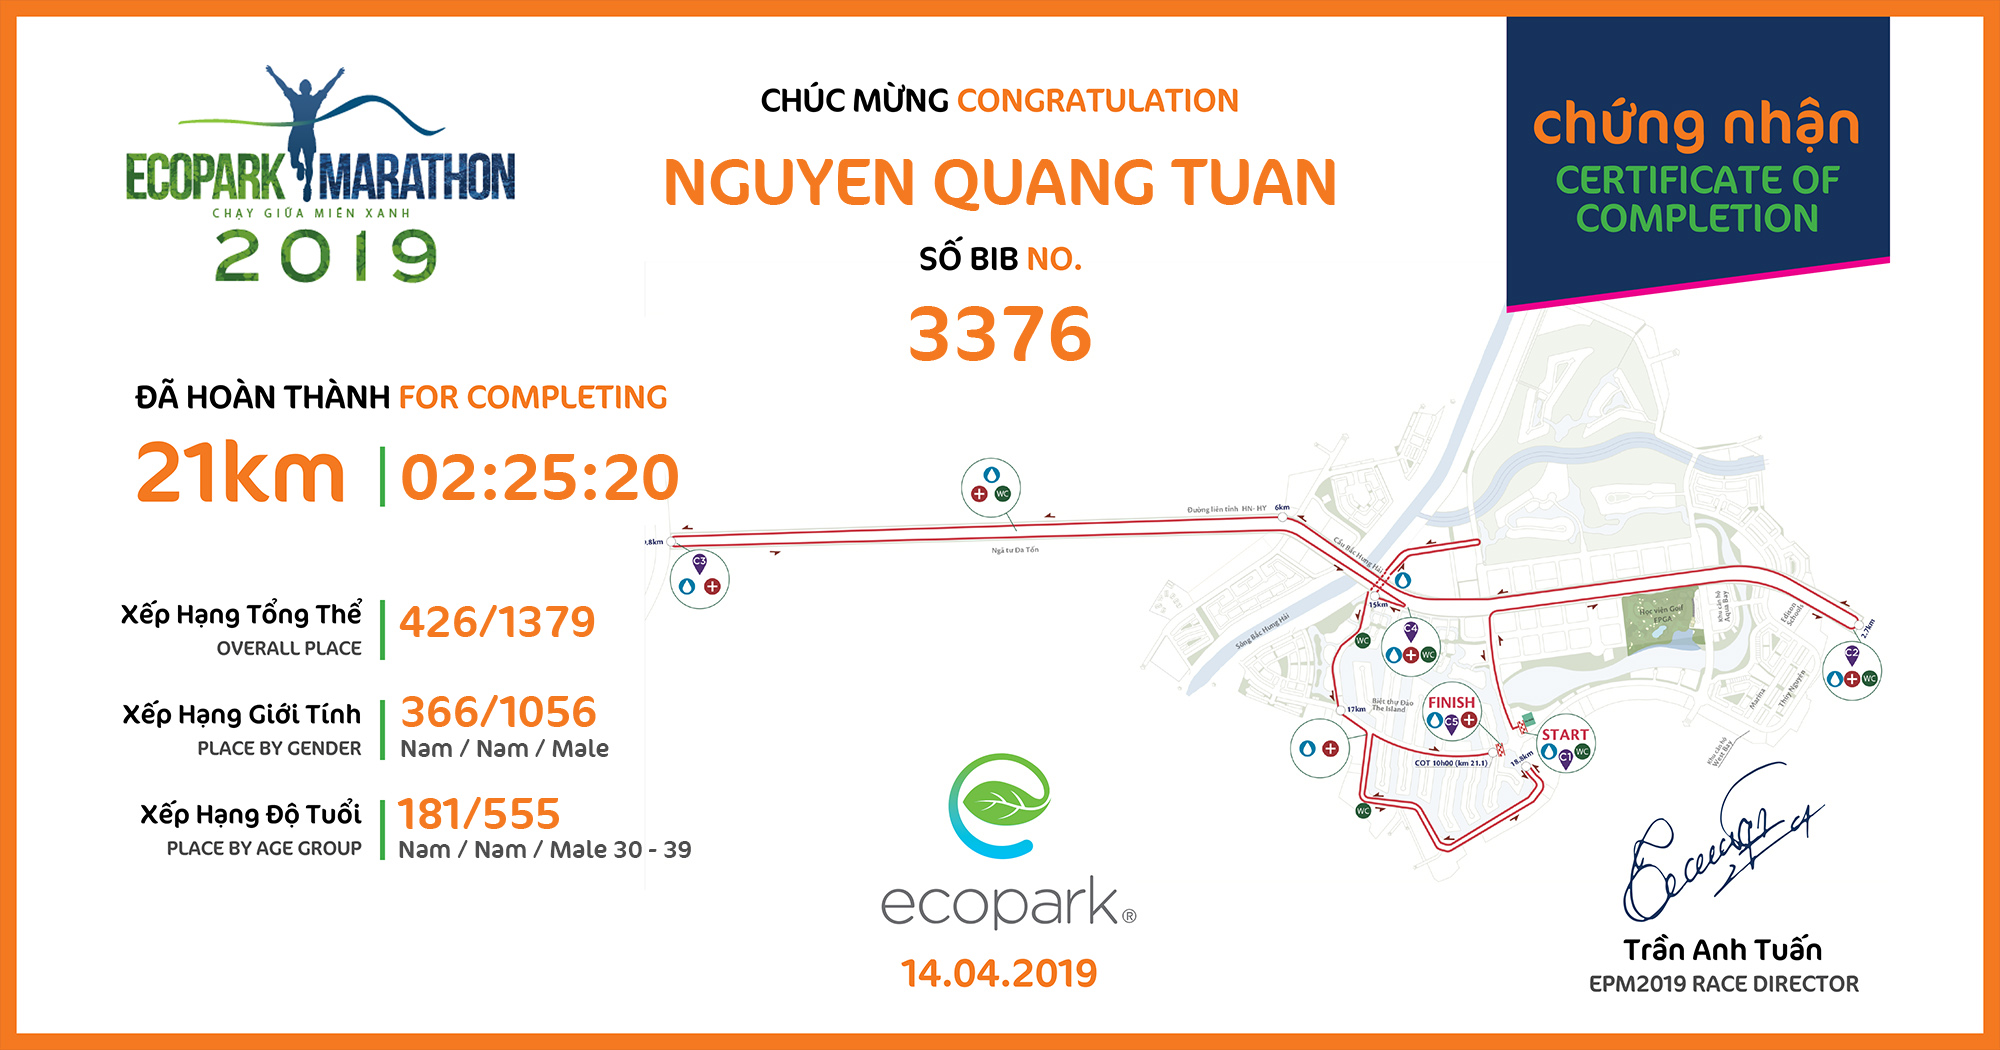 3376 - Nguyen Quang Tuan